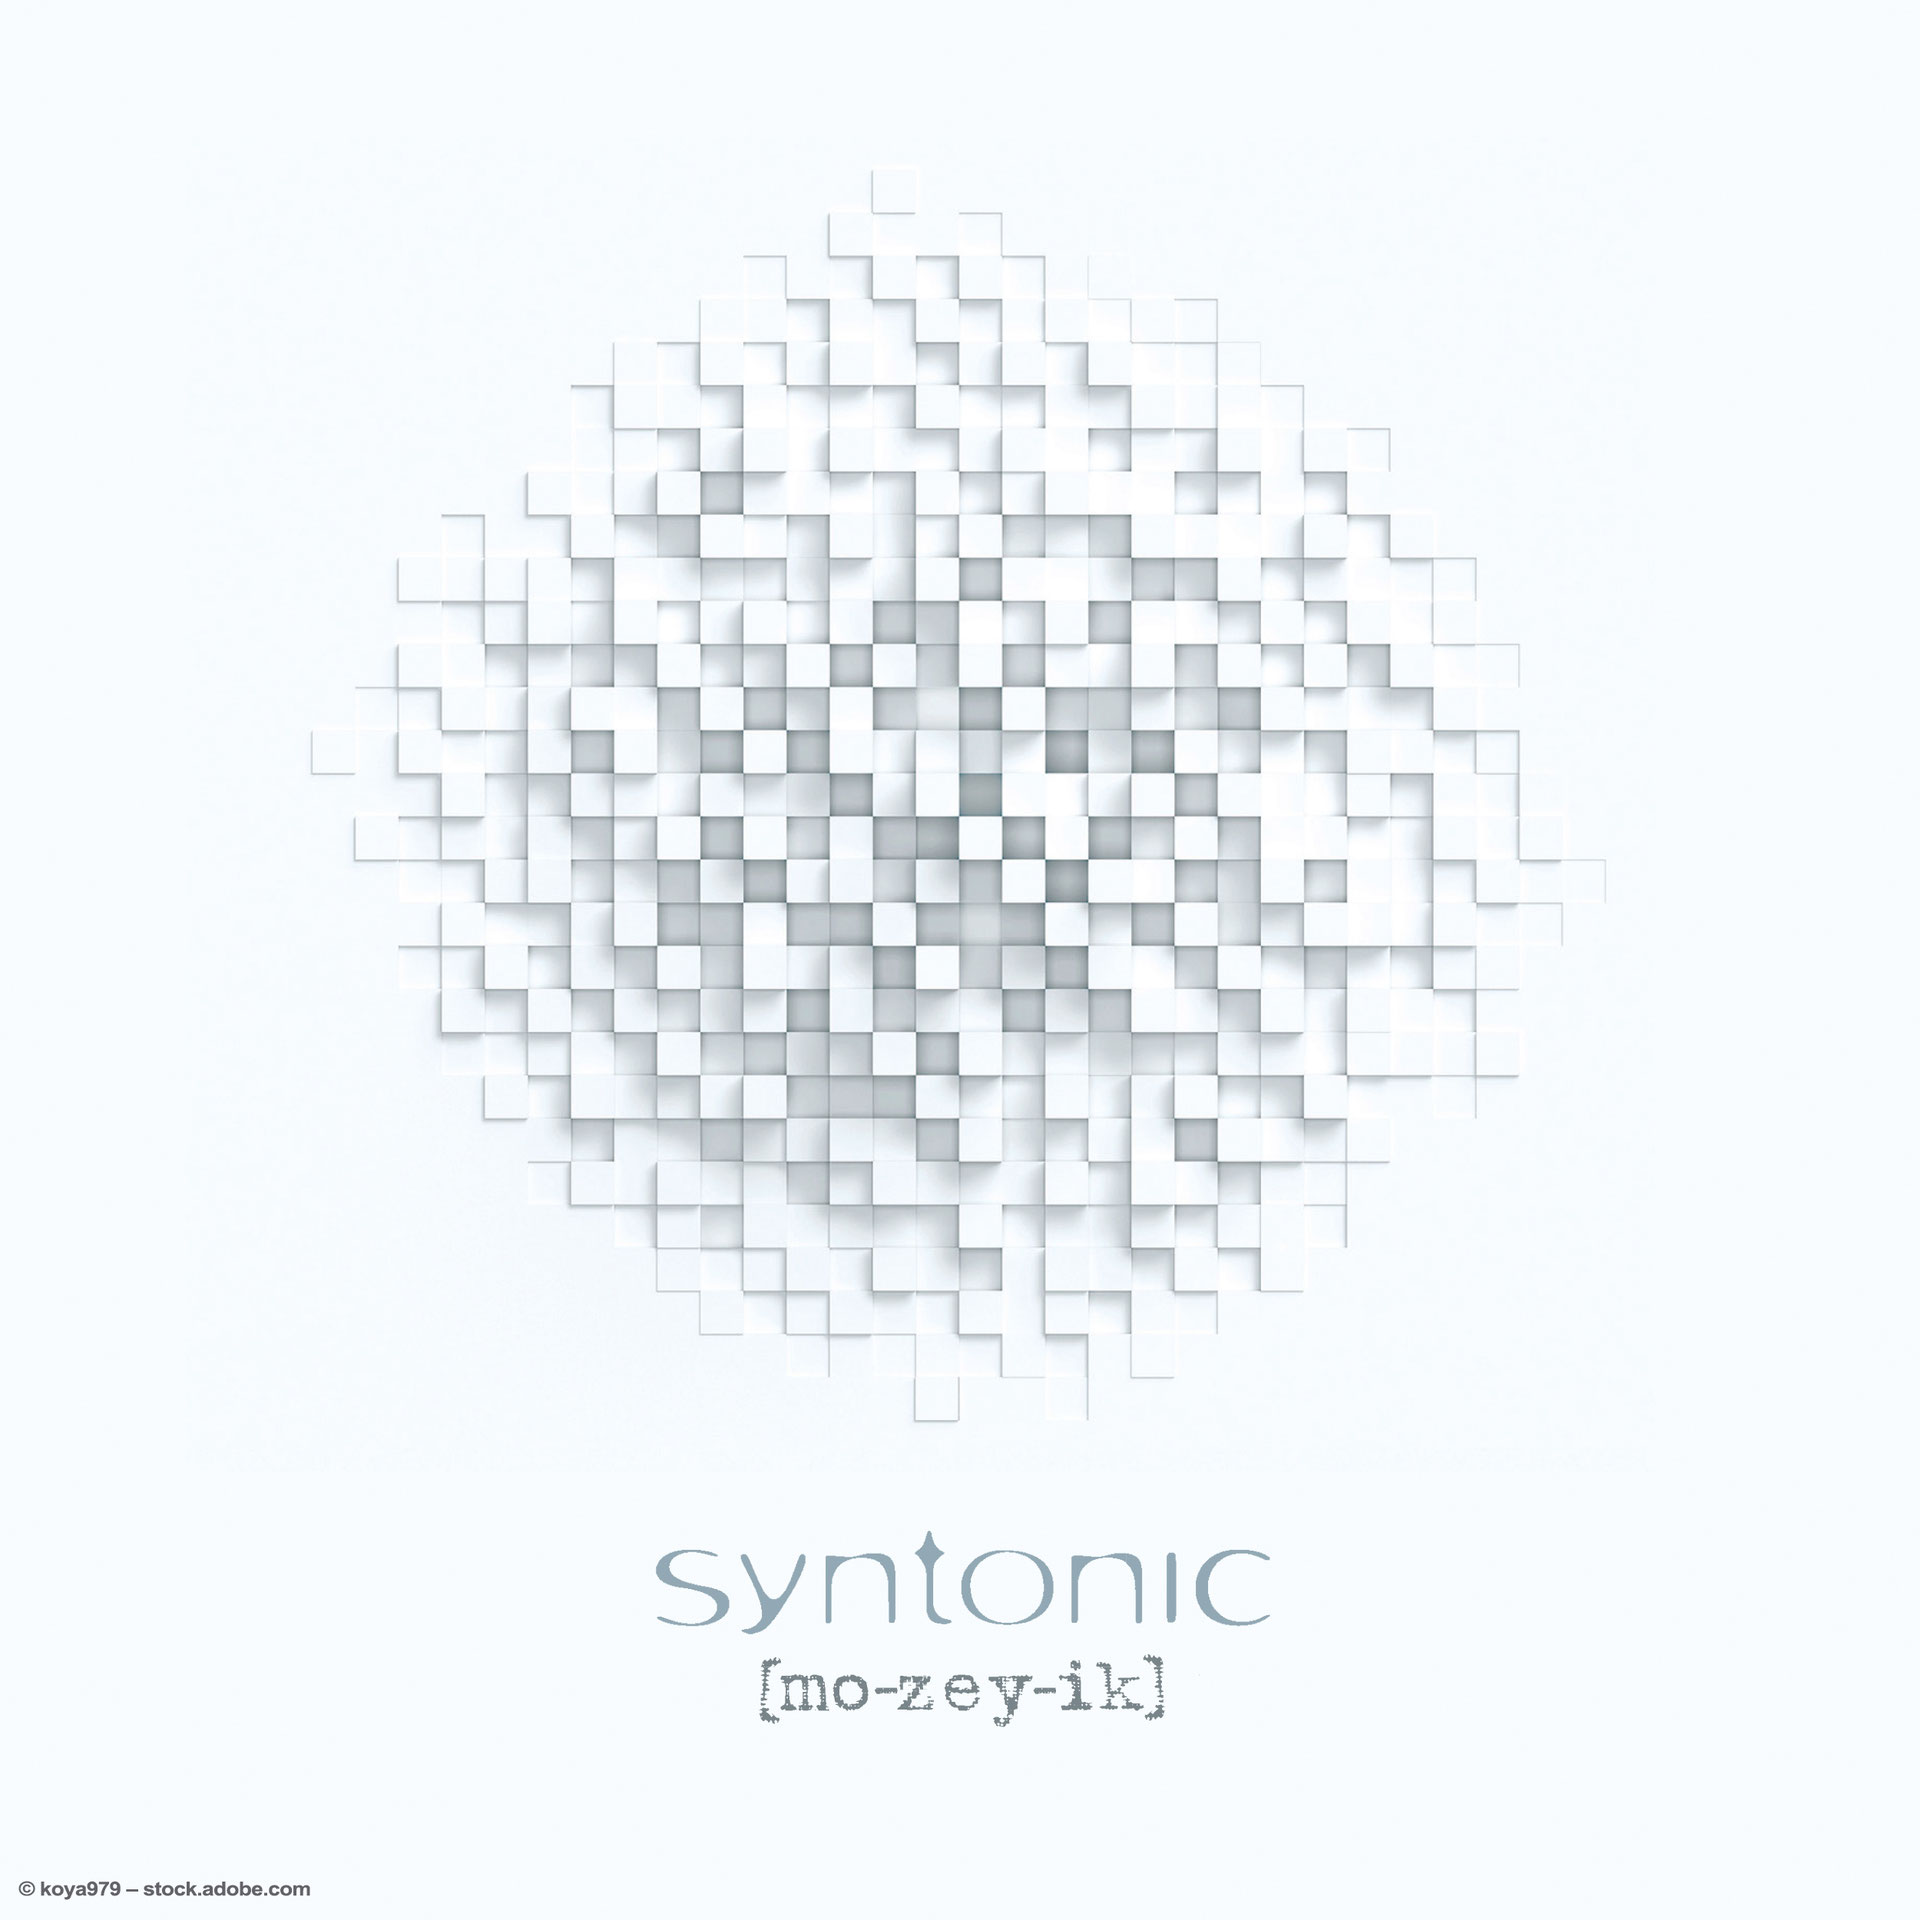 (c) Syntonic-music.com